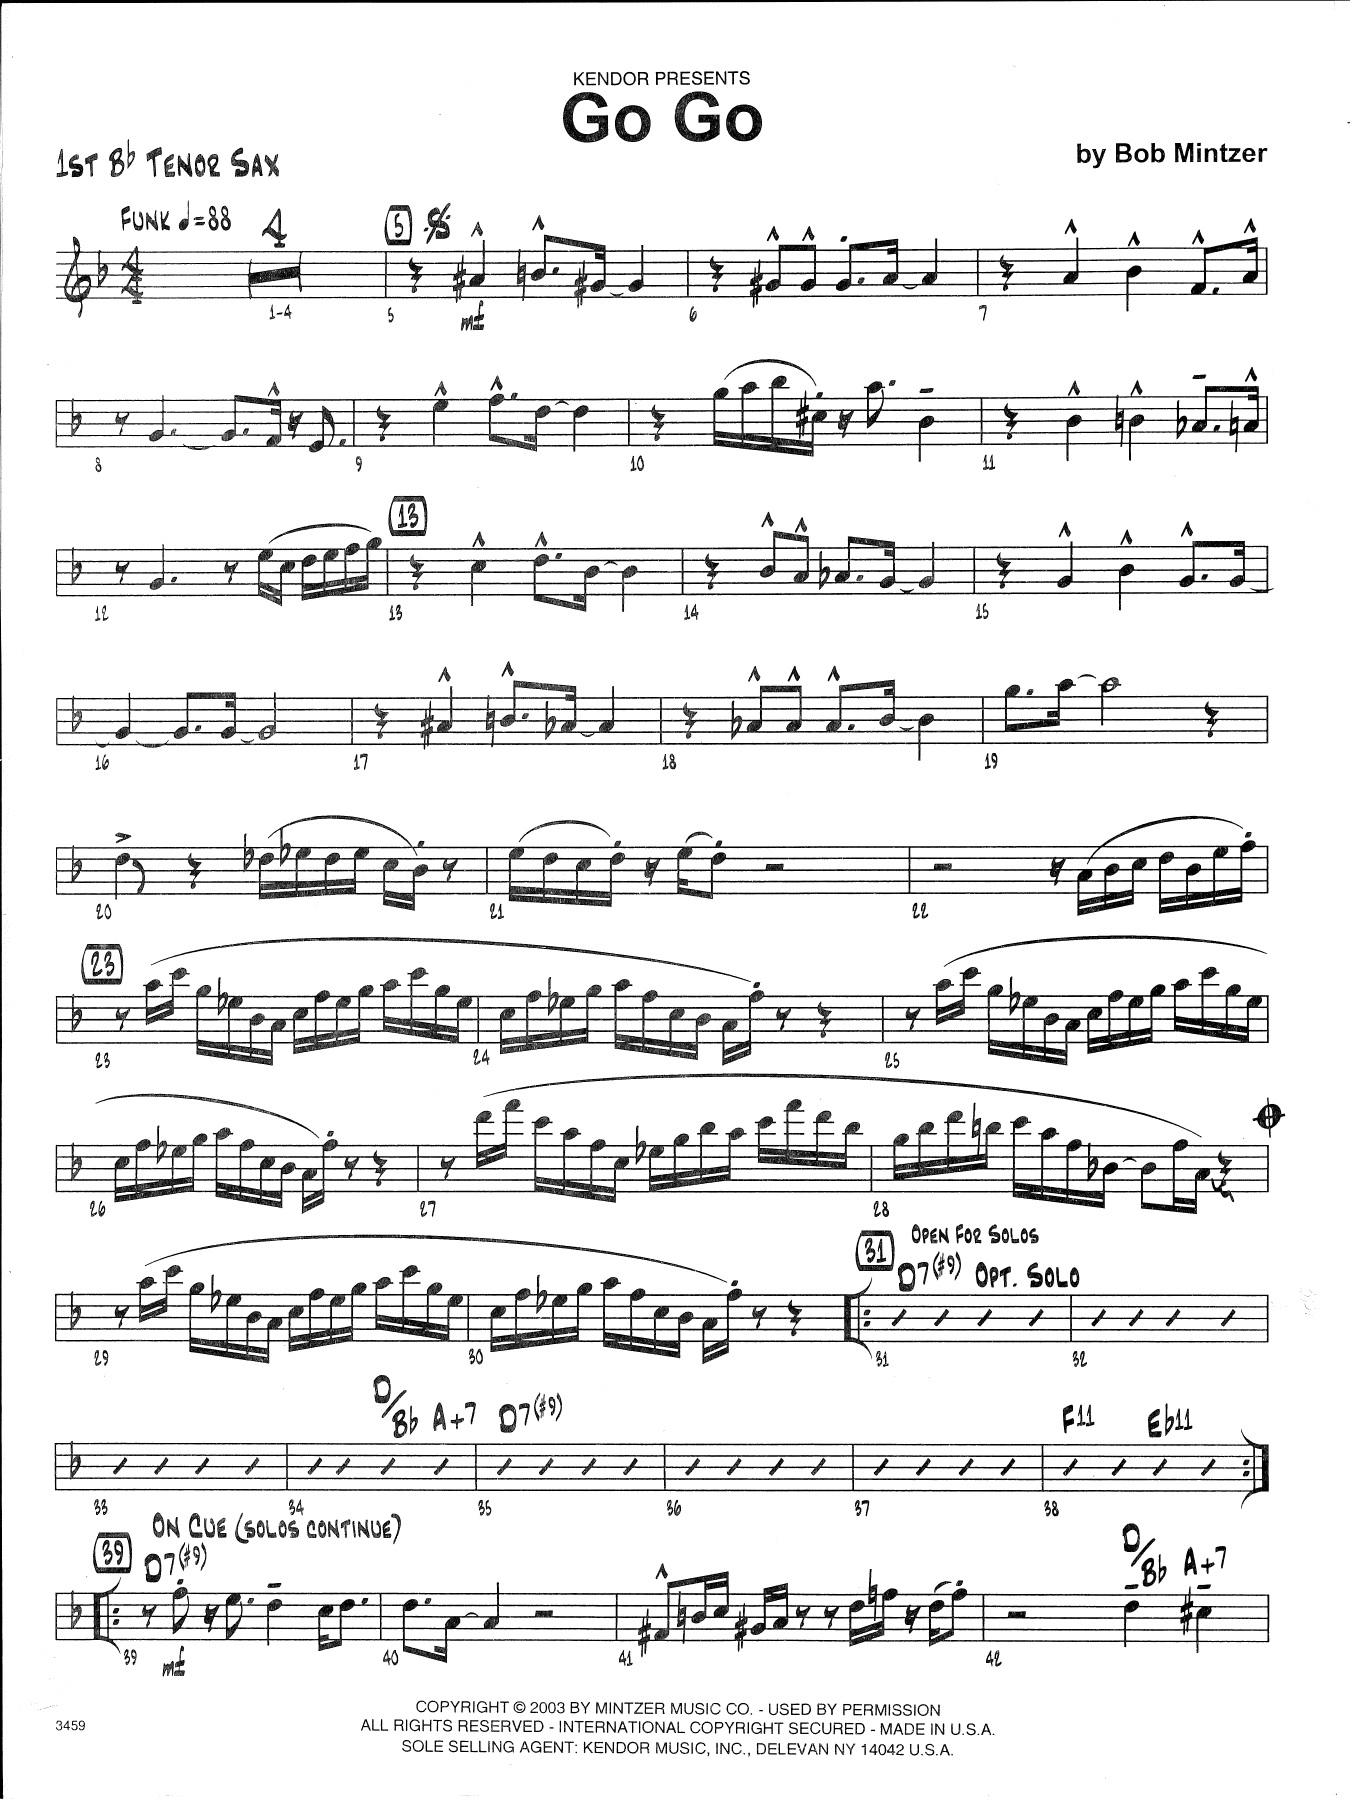 Download Bob Mintzer Go Go - 1st Tenor Saxophone Sheet Music